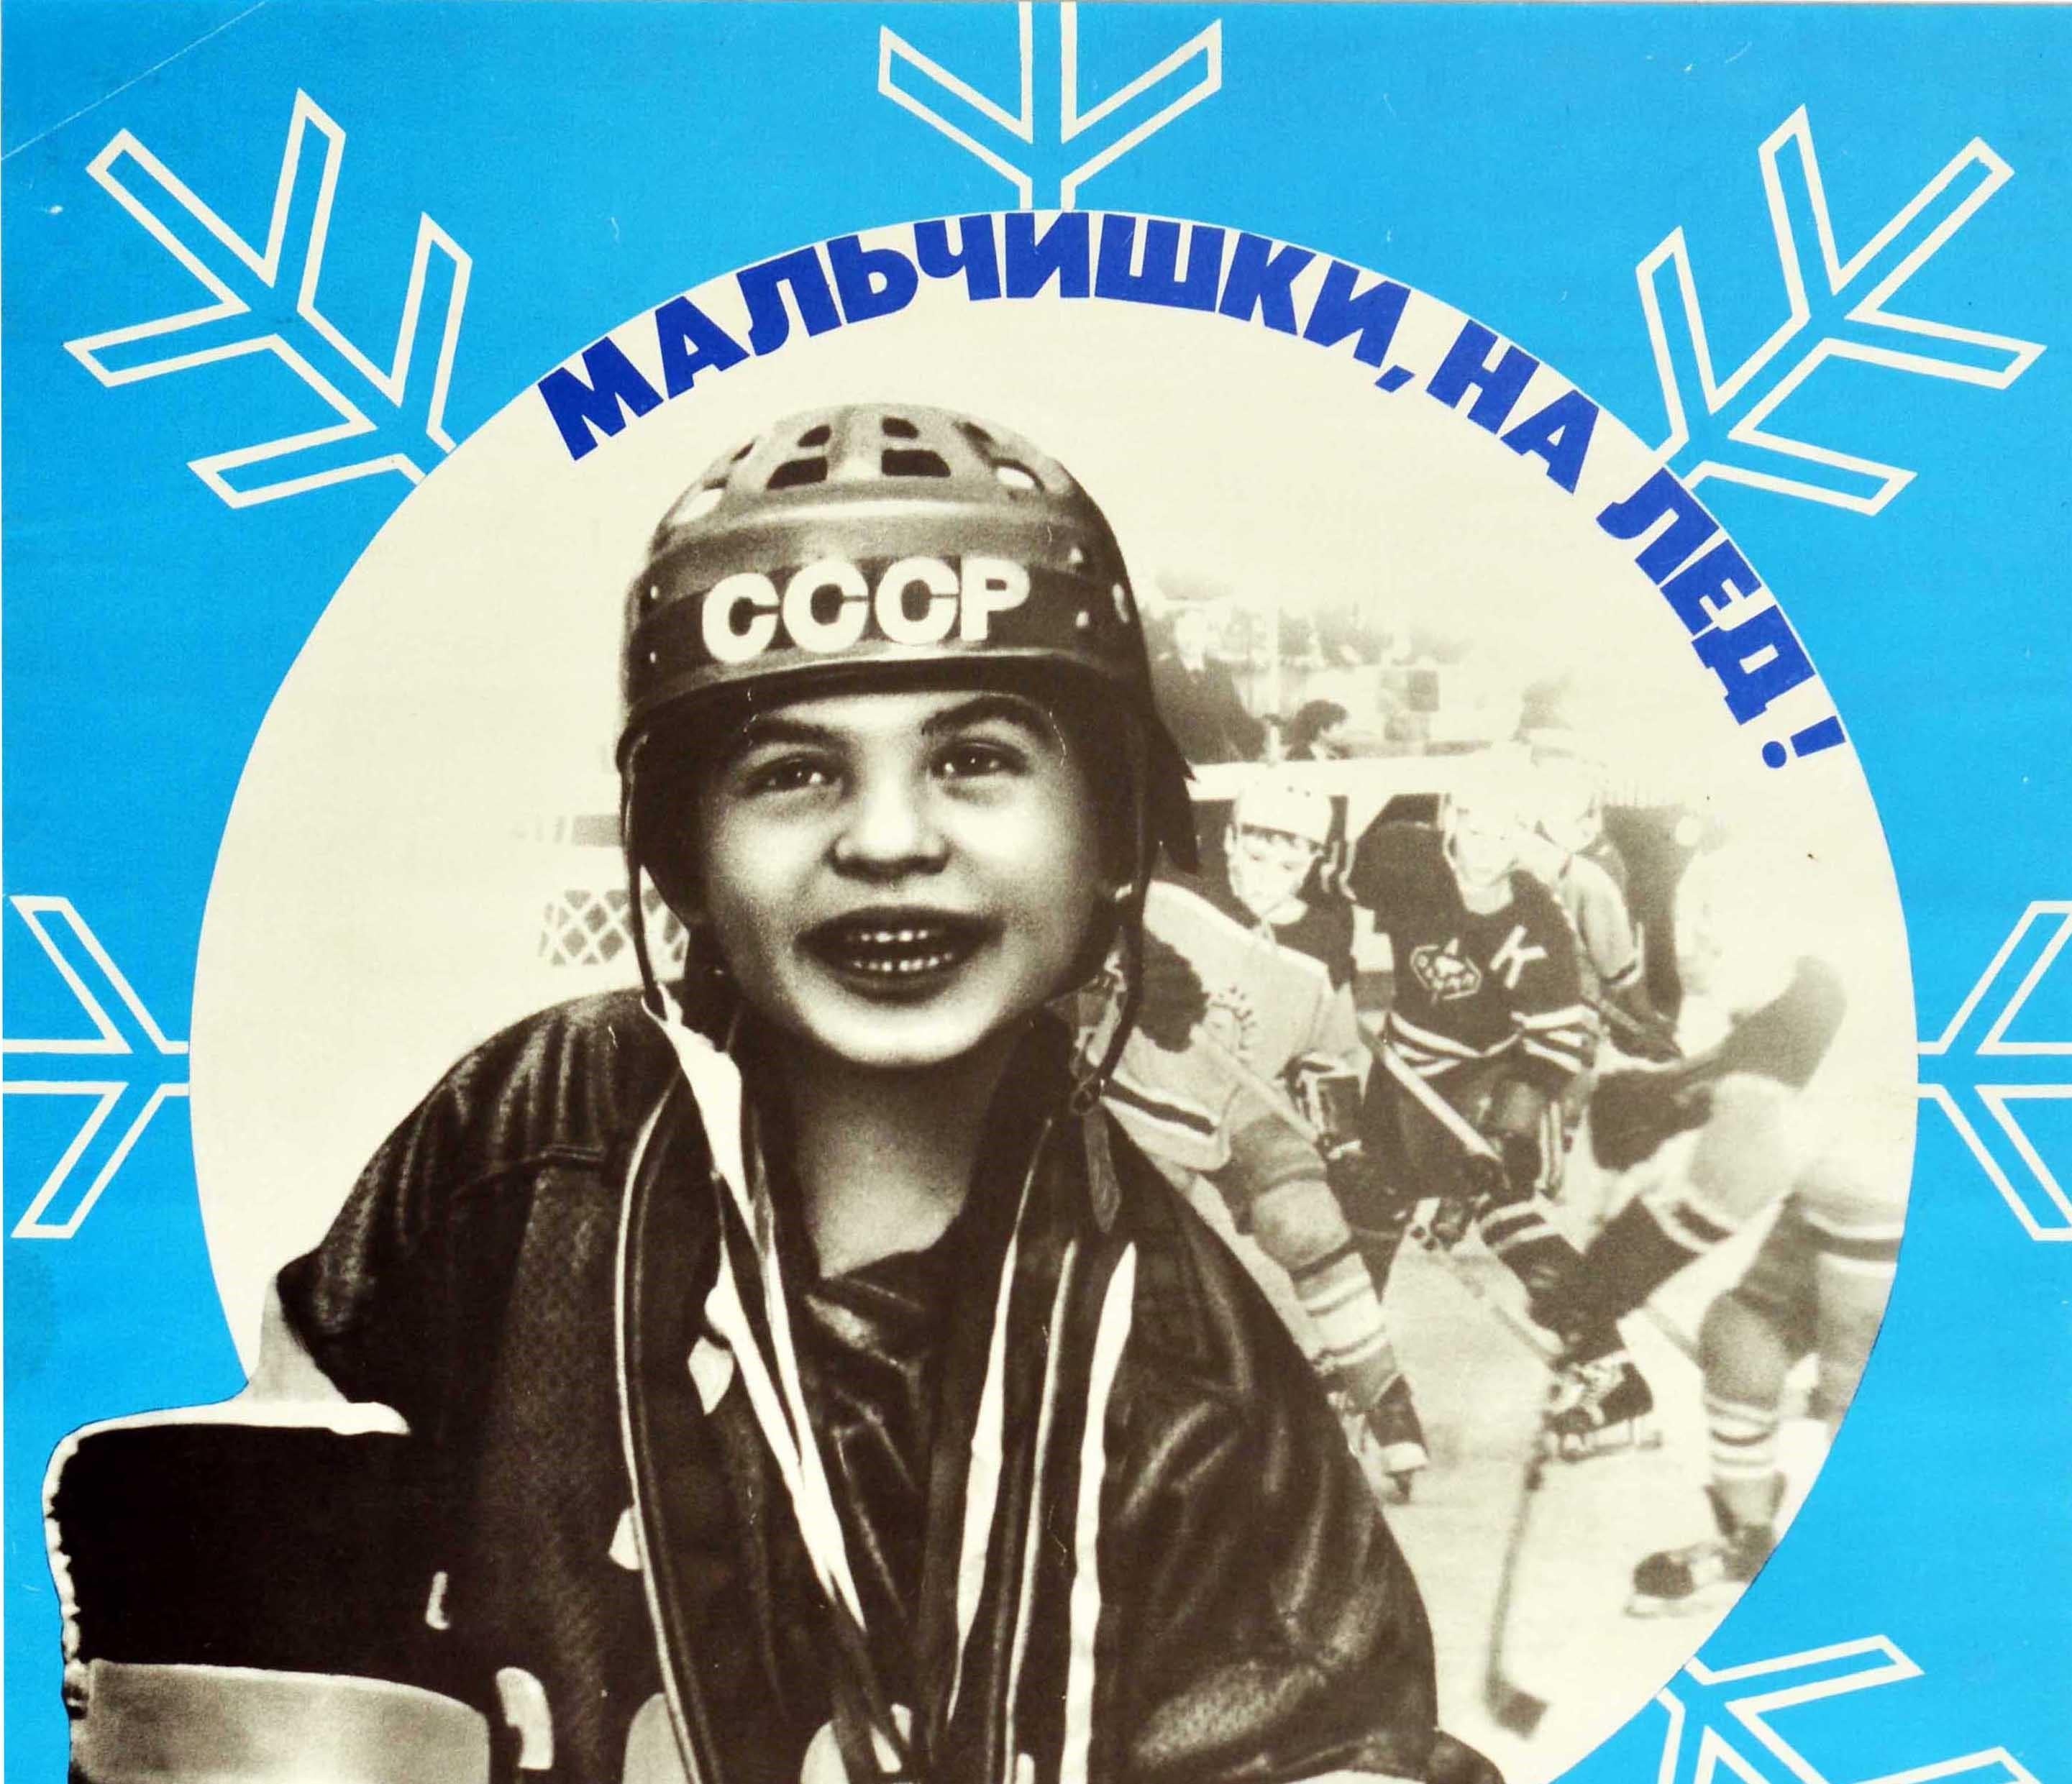 Original Vintage Poster Get On The Ice! USSR Ice Hockey Soviet Sport Propaganda - Print by D. Ivanov